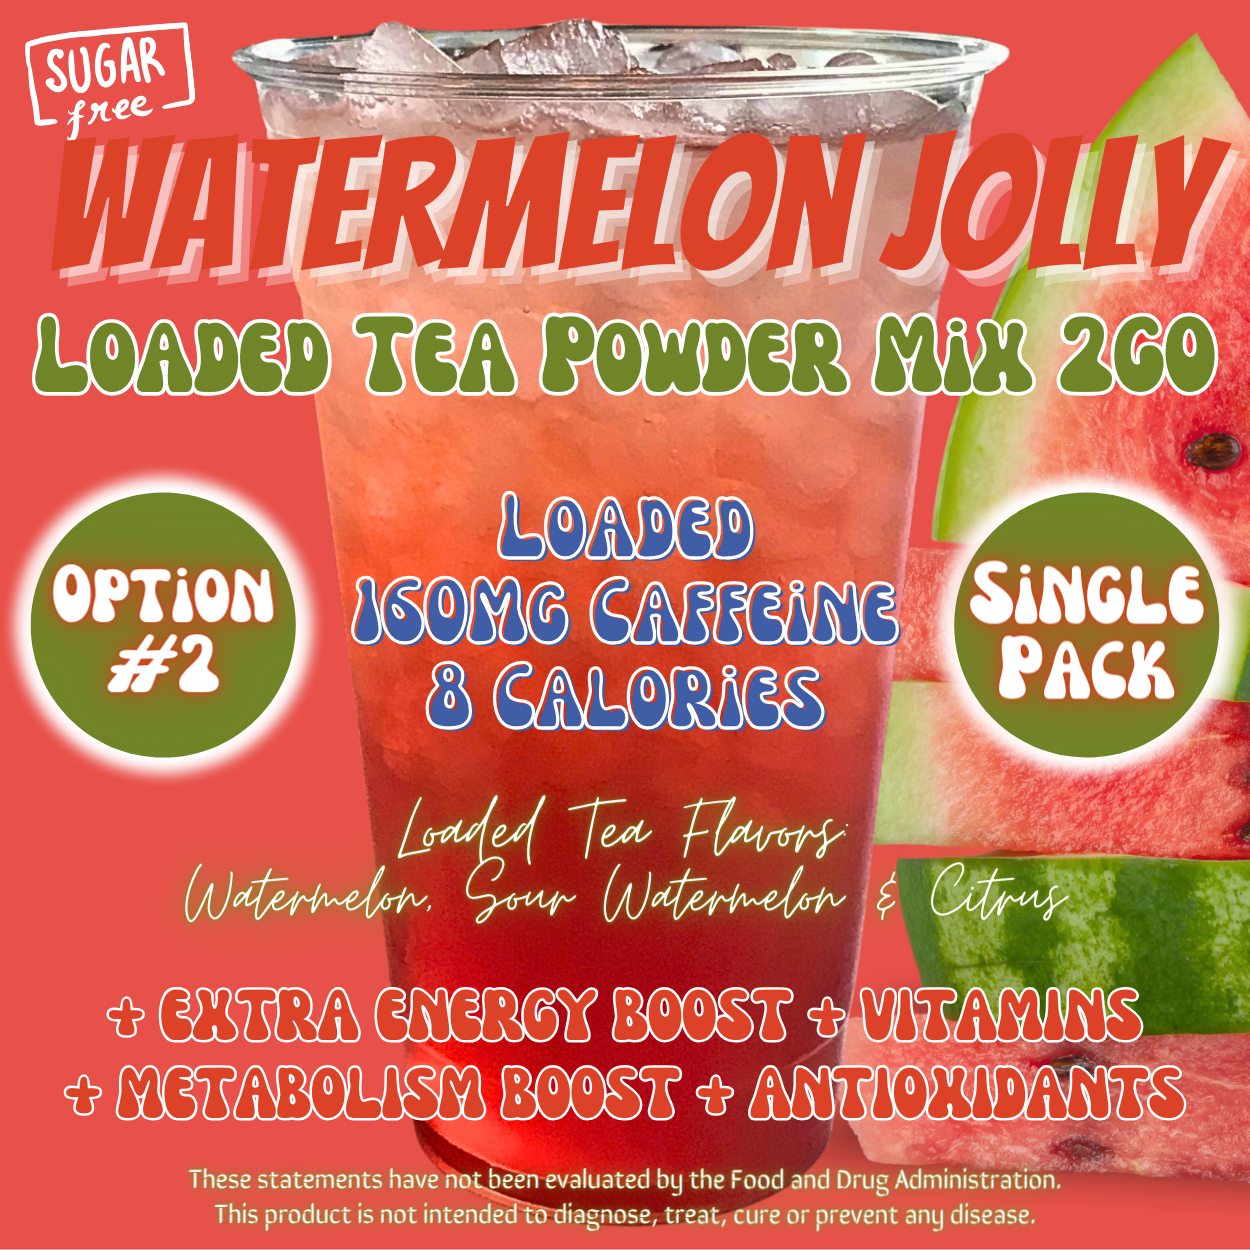 Watermelon Jolly: Loaded Tea Powder Mix 2GO Packets